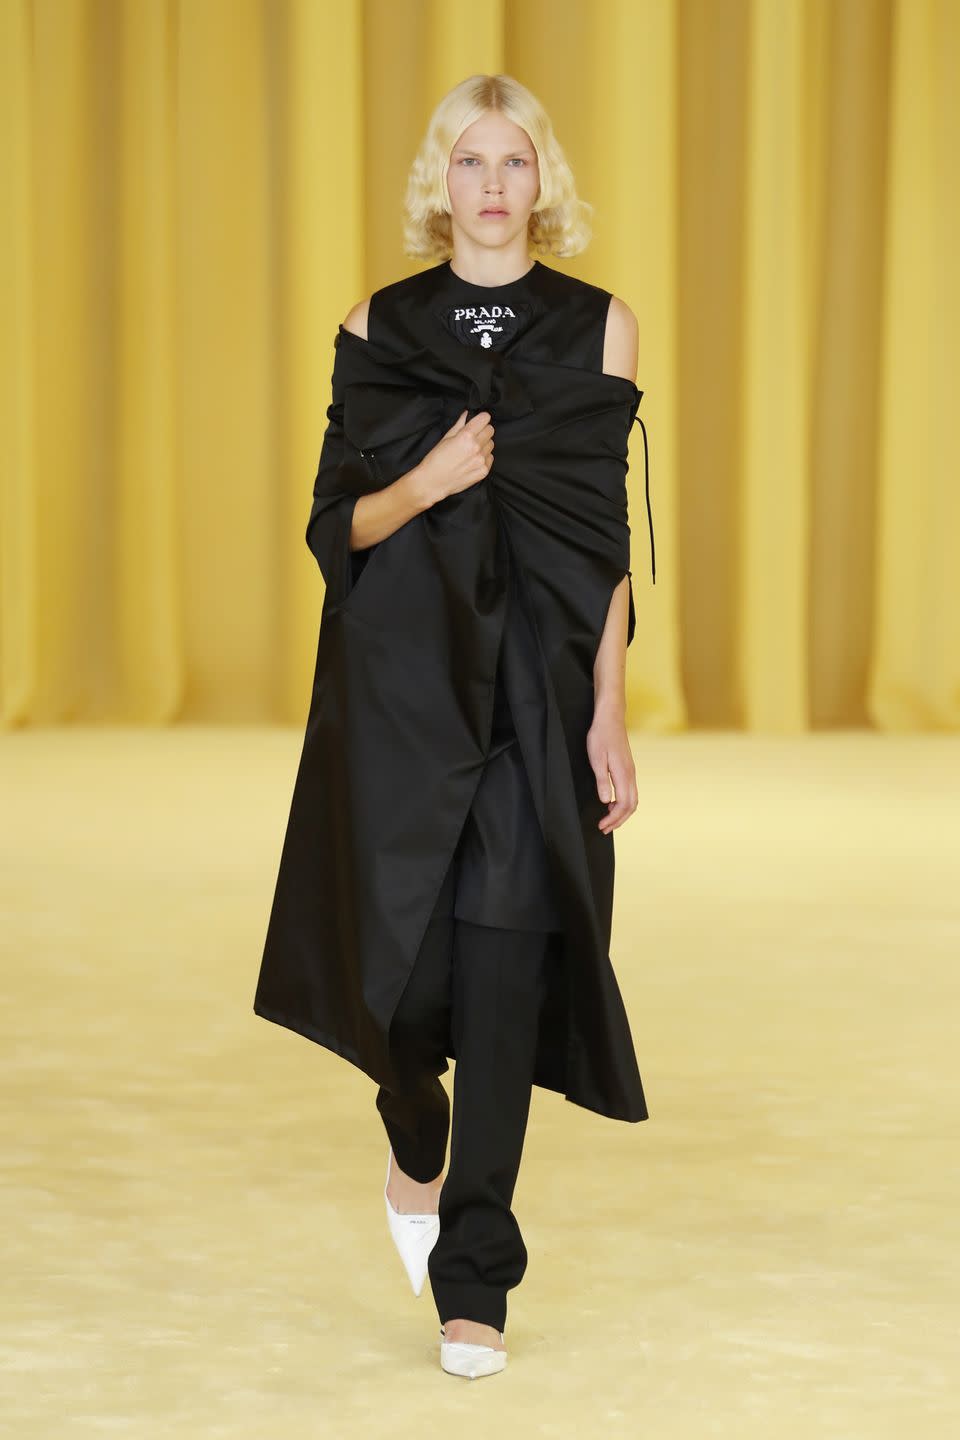 Prada Unveils First Collection By Miuccia Prada and Raf Simons